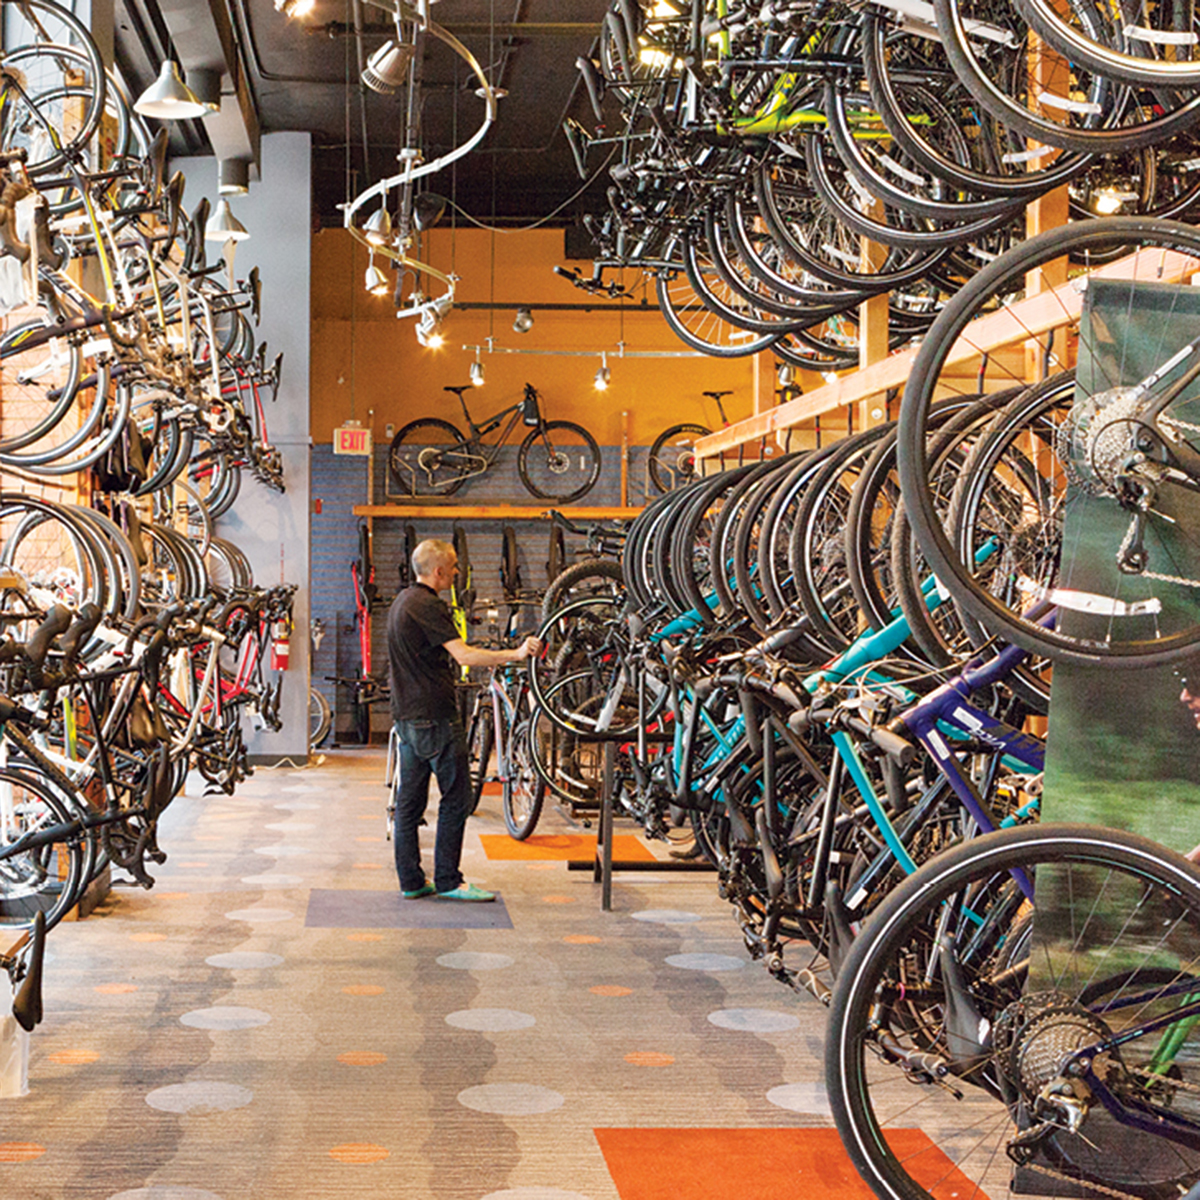 the closest bike shop